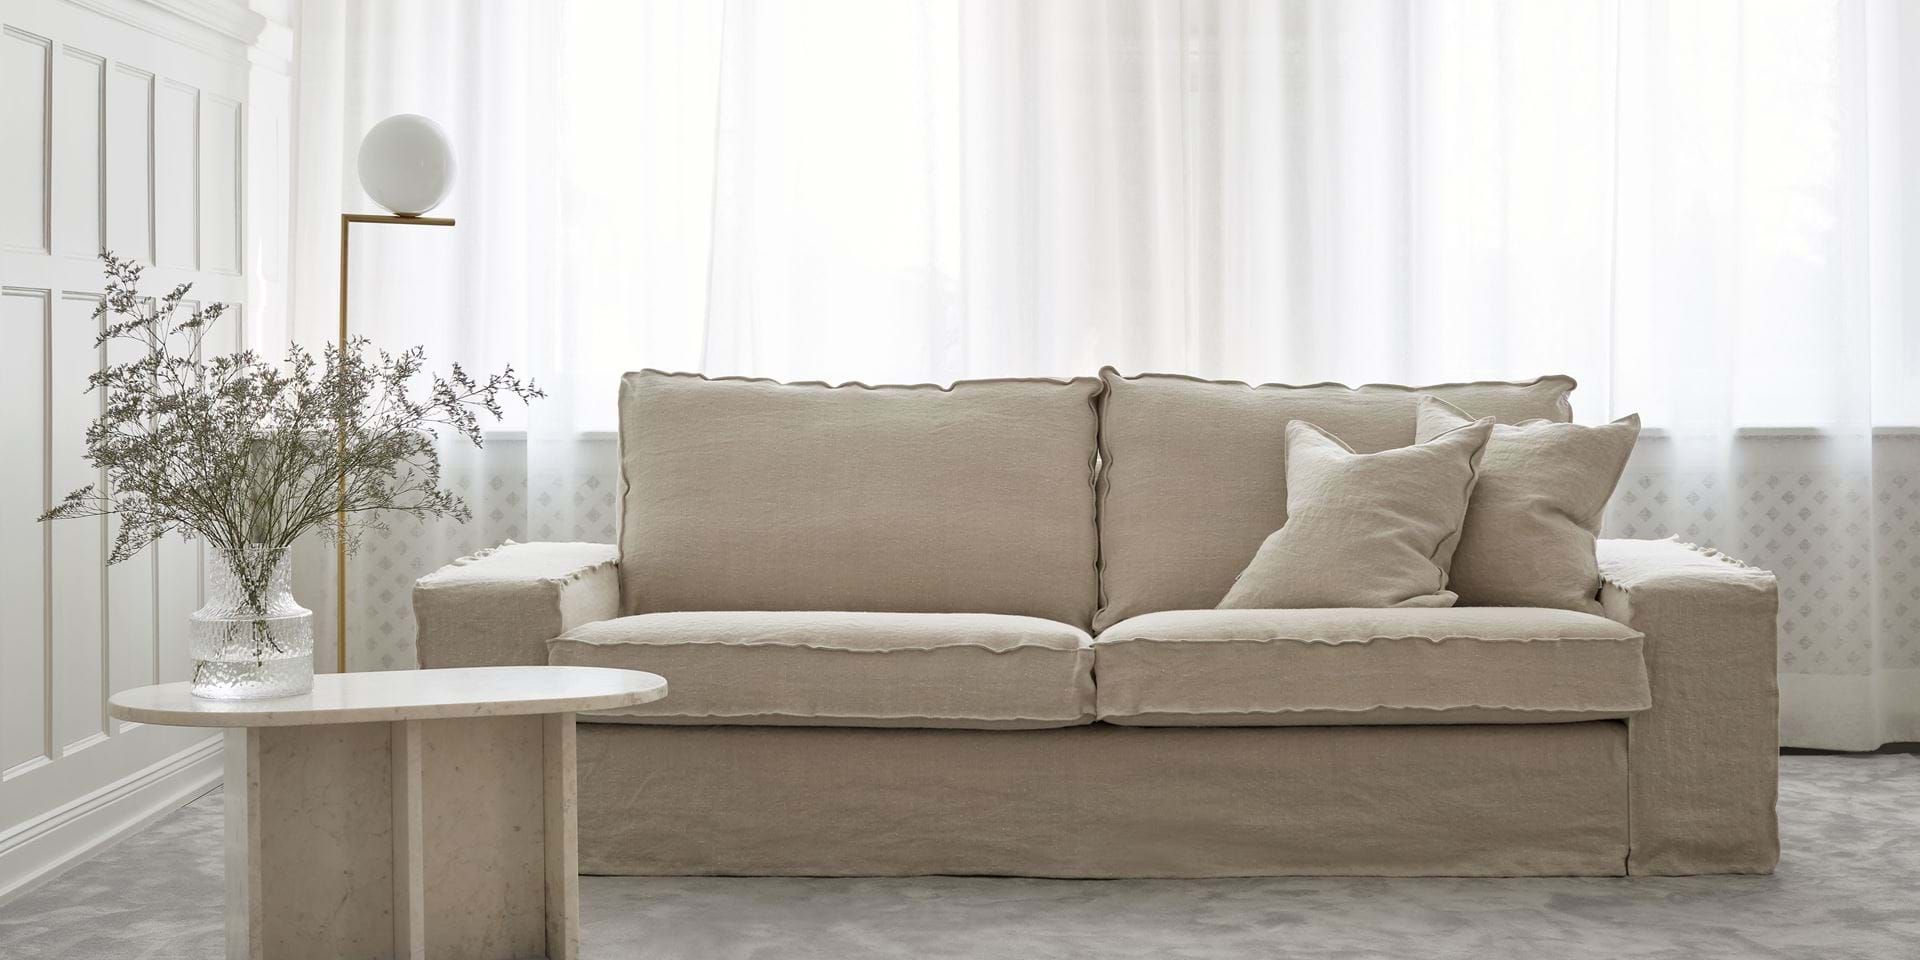 IKEA Kivik sofa review by Bemz | Bemz